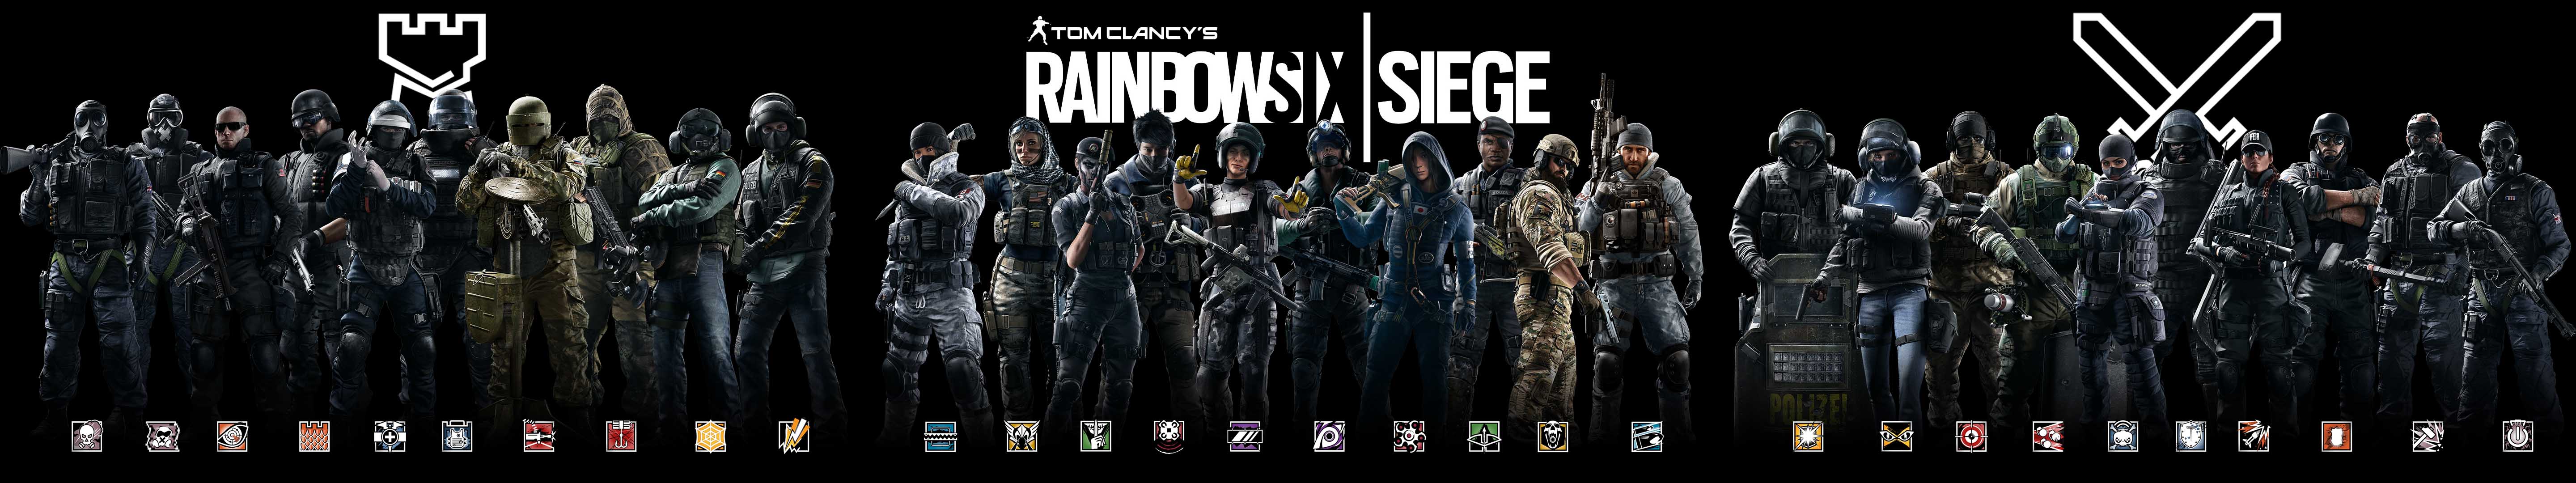 Rainbow Six: Siege Wallpapers